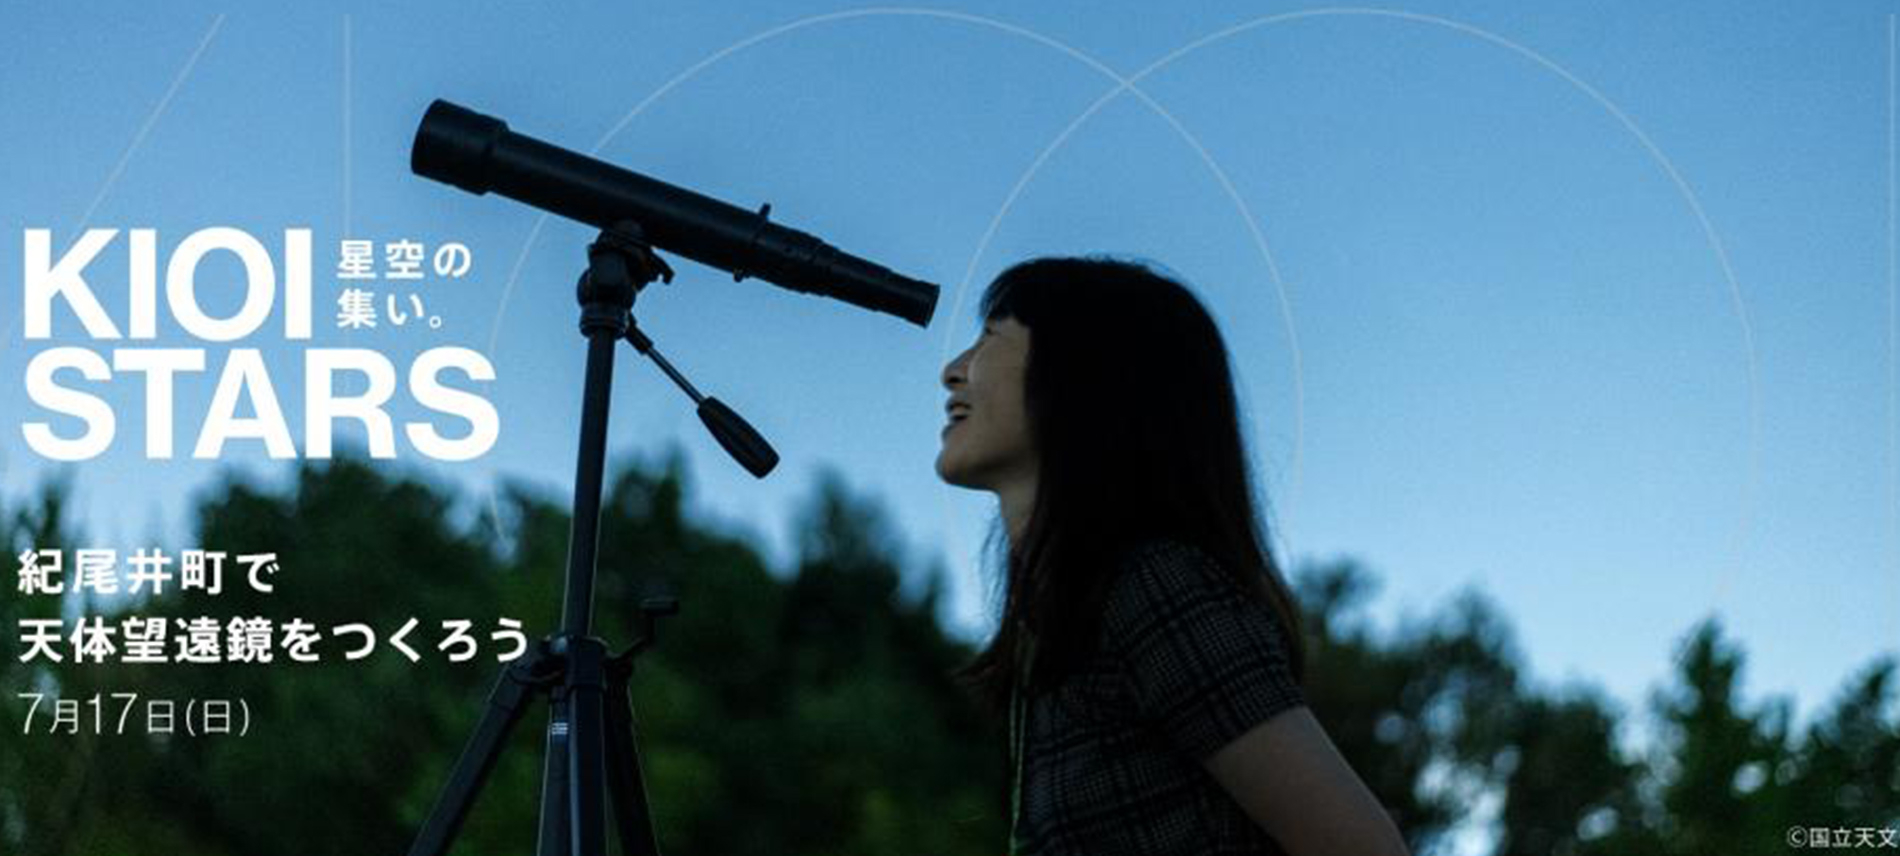 KIOI STARS 星空の集い。 ―紀尾井町で天体望遠鏡をつくろう―